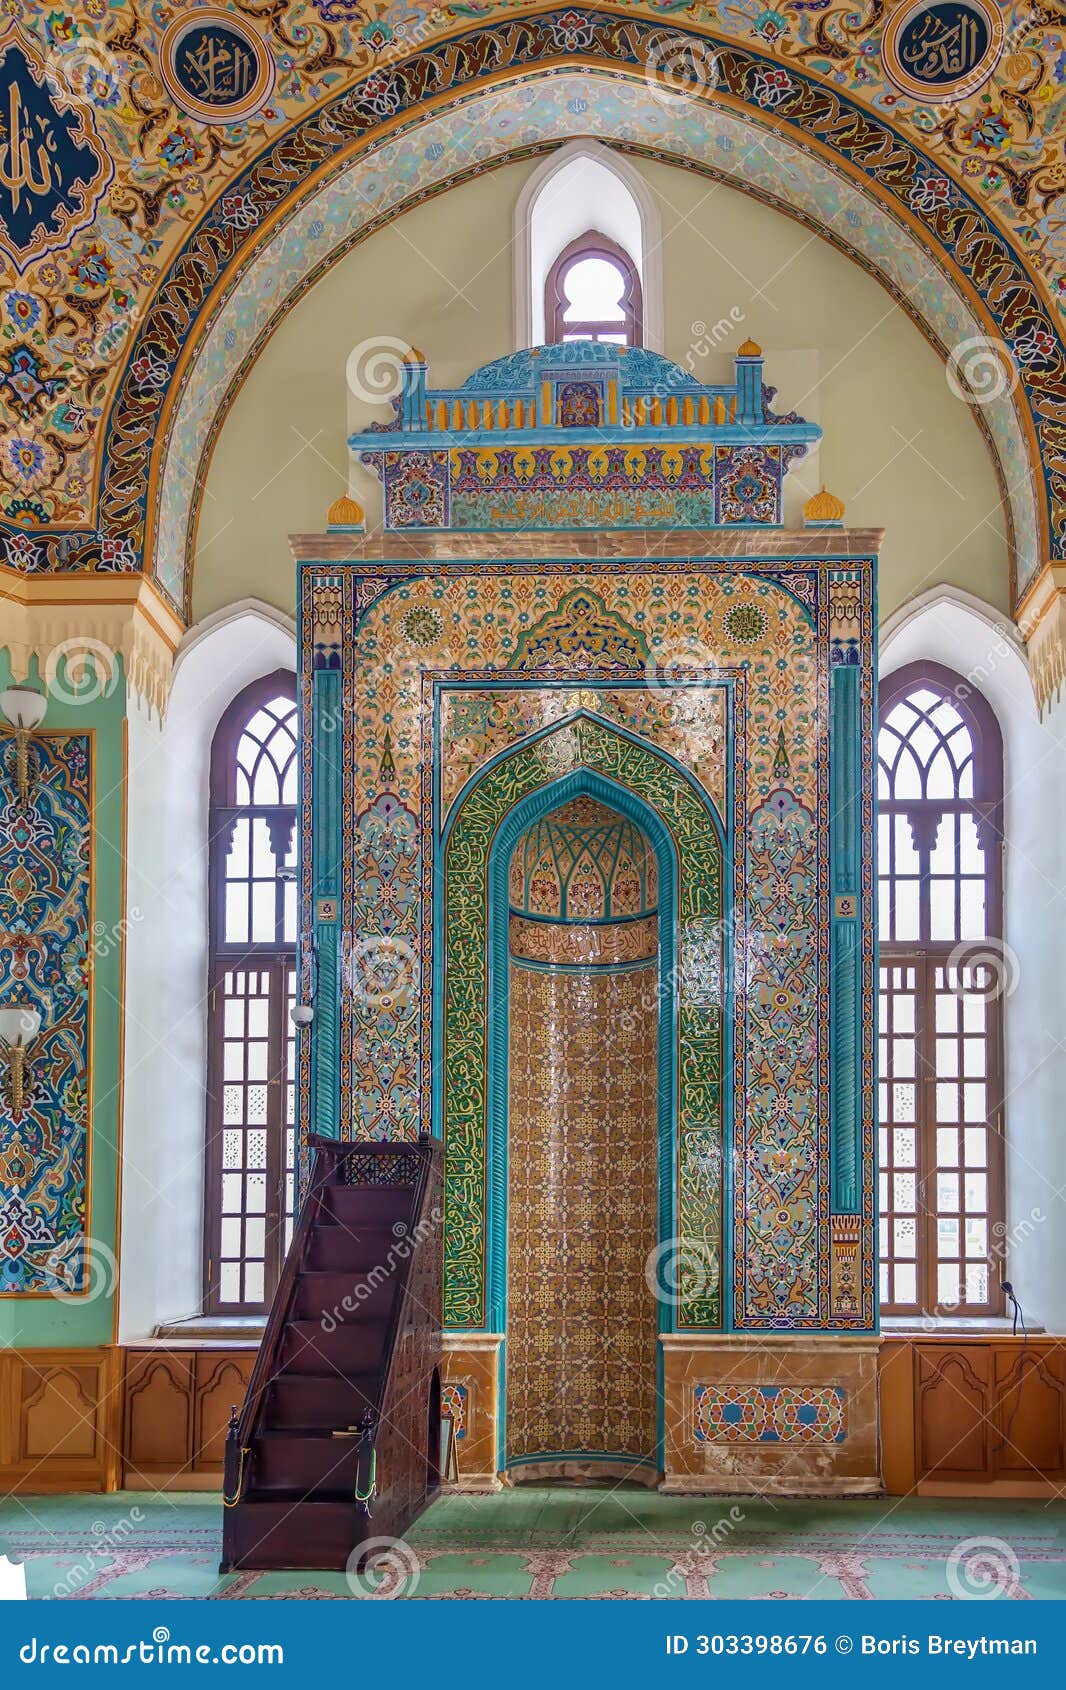 taza pir mosque, baku, azerbaijan